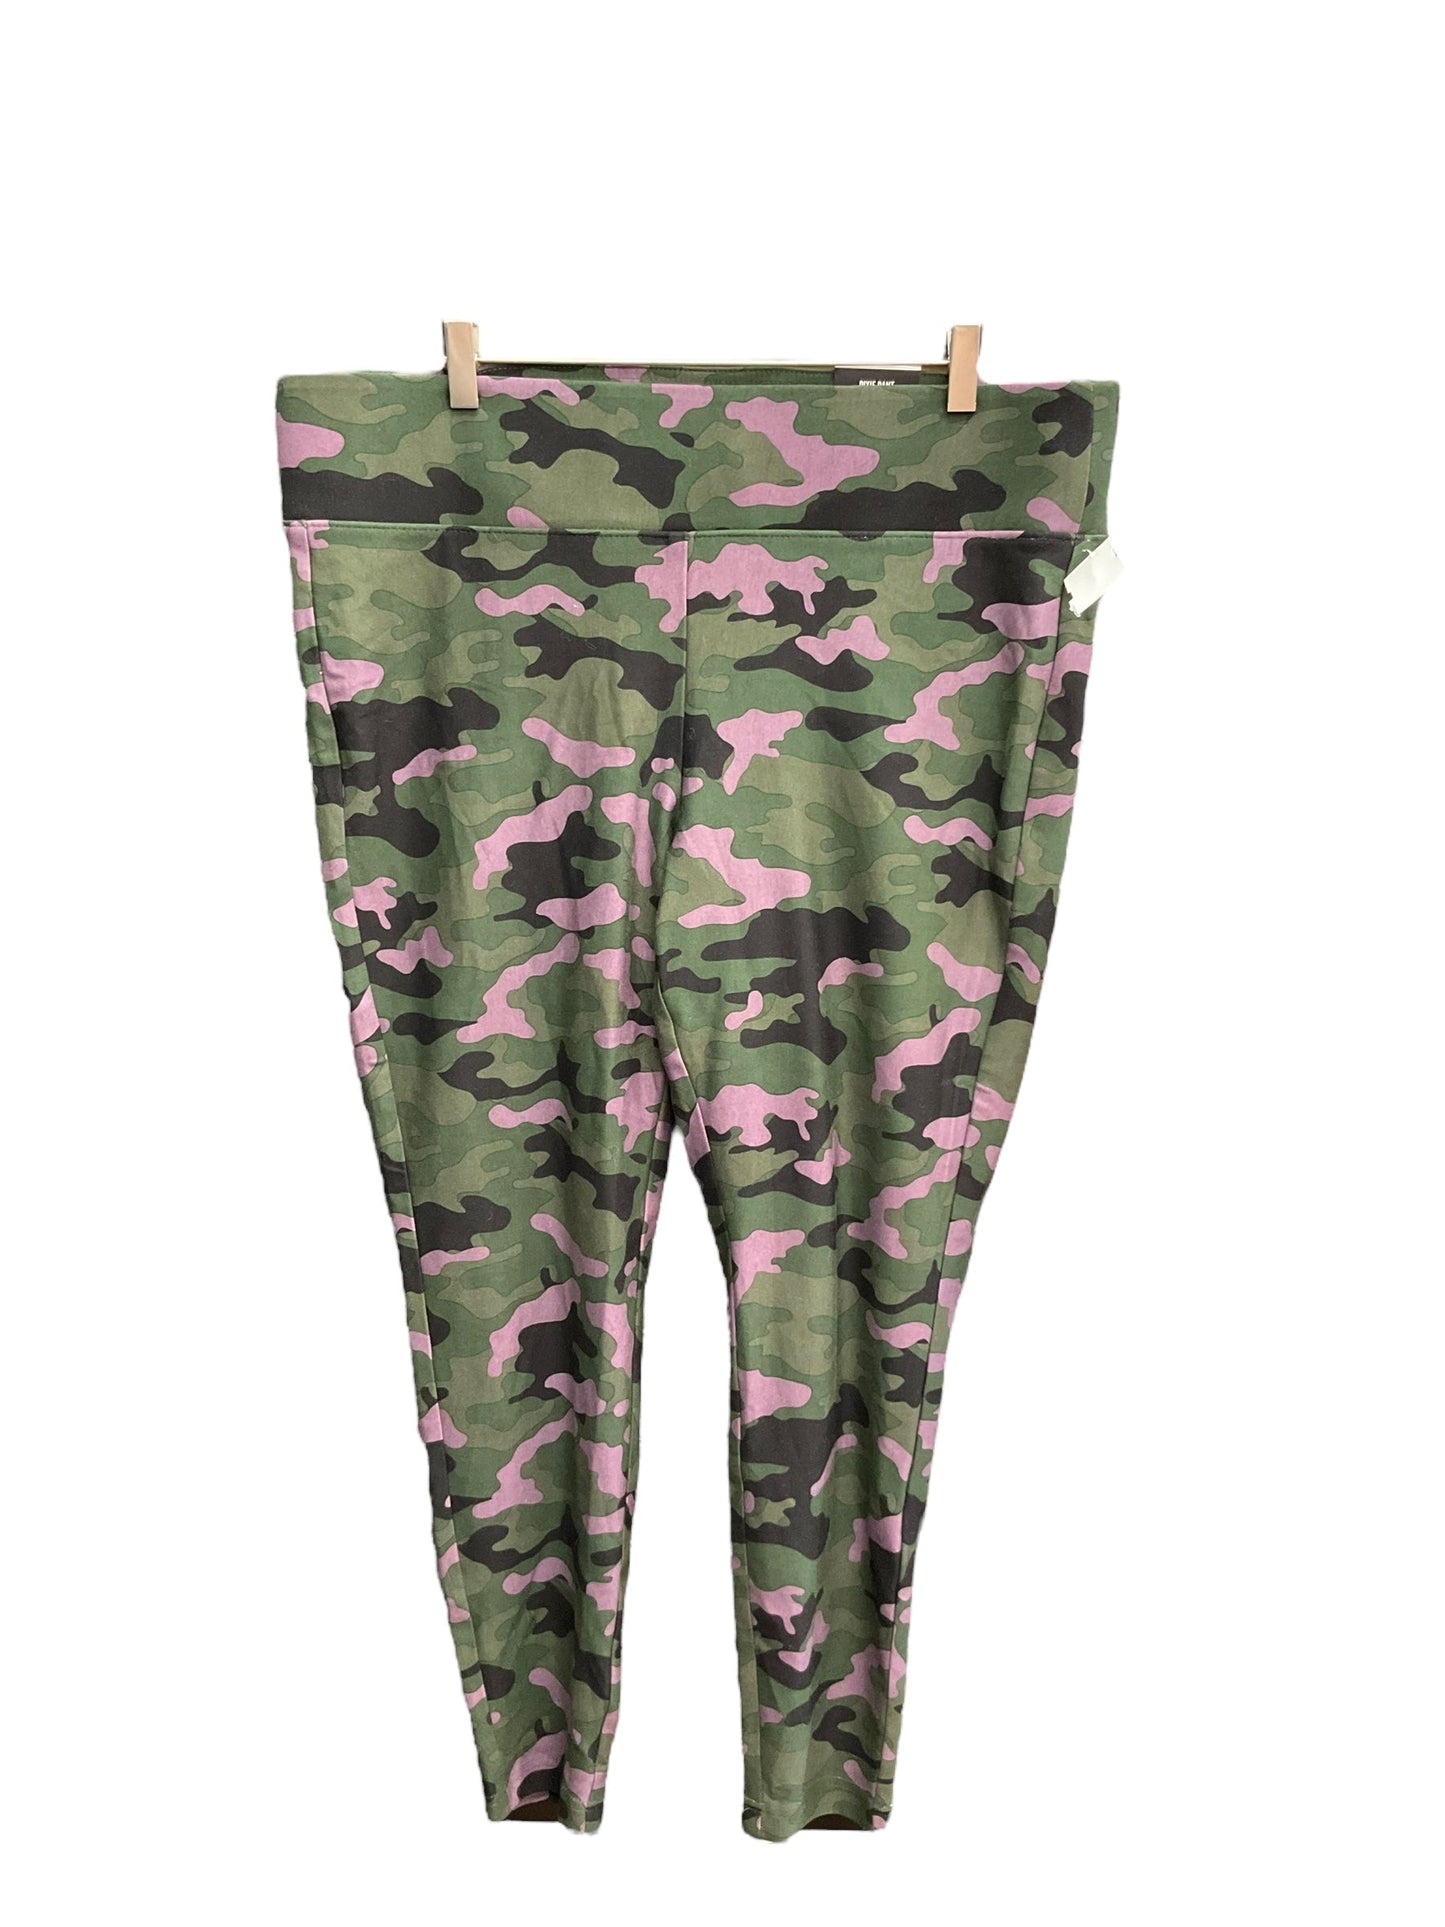 Camouflage Print Pants Leggings Torrid, Size 20